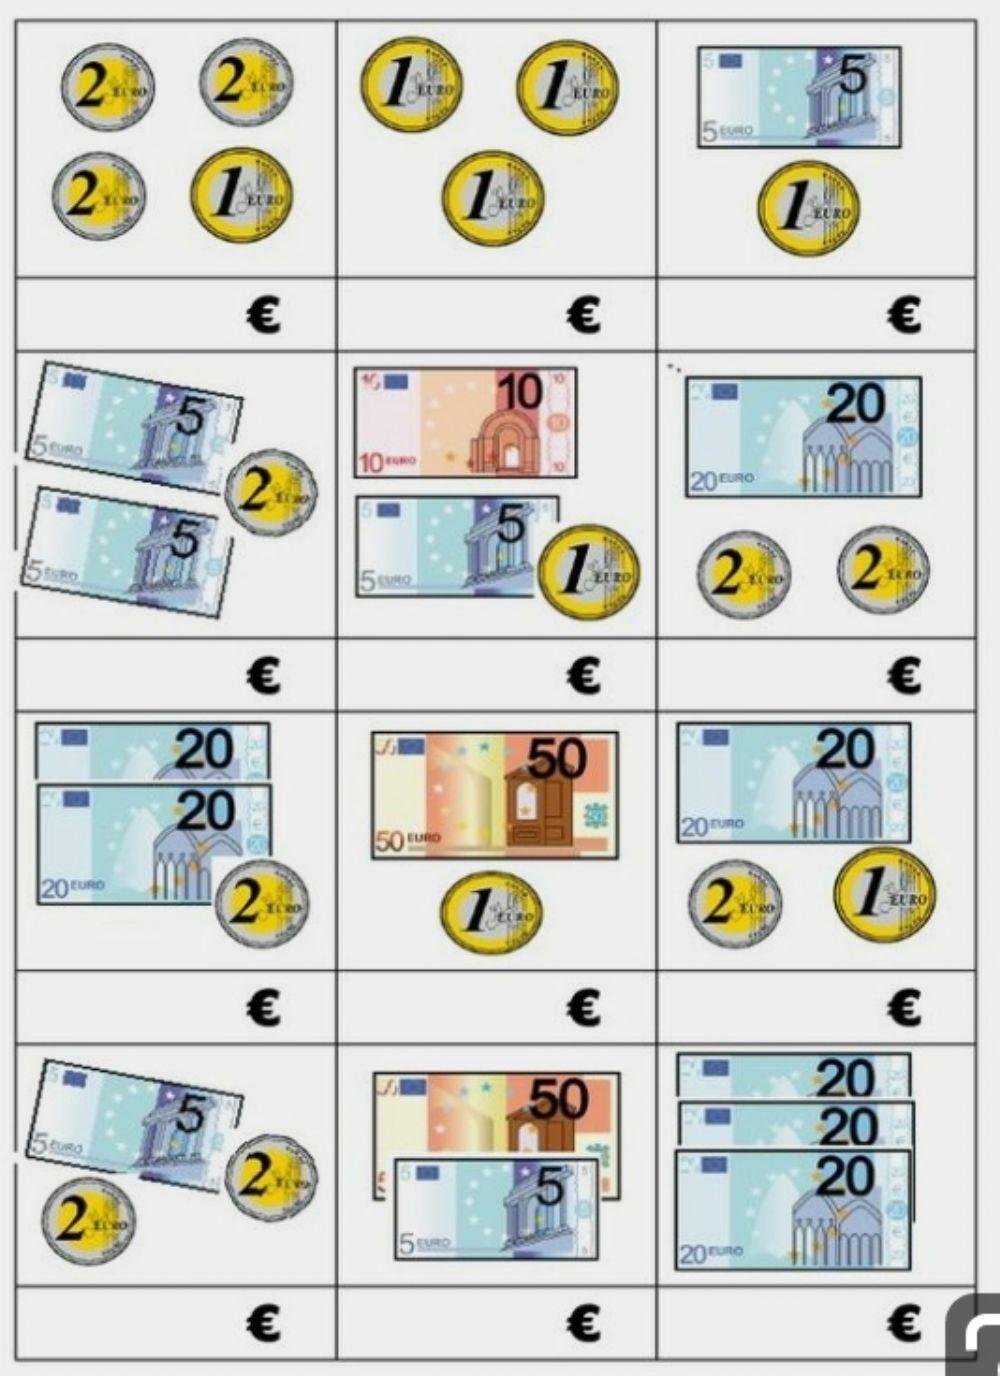 Cálculo de dinero (euros)